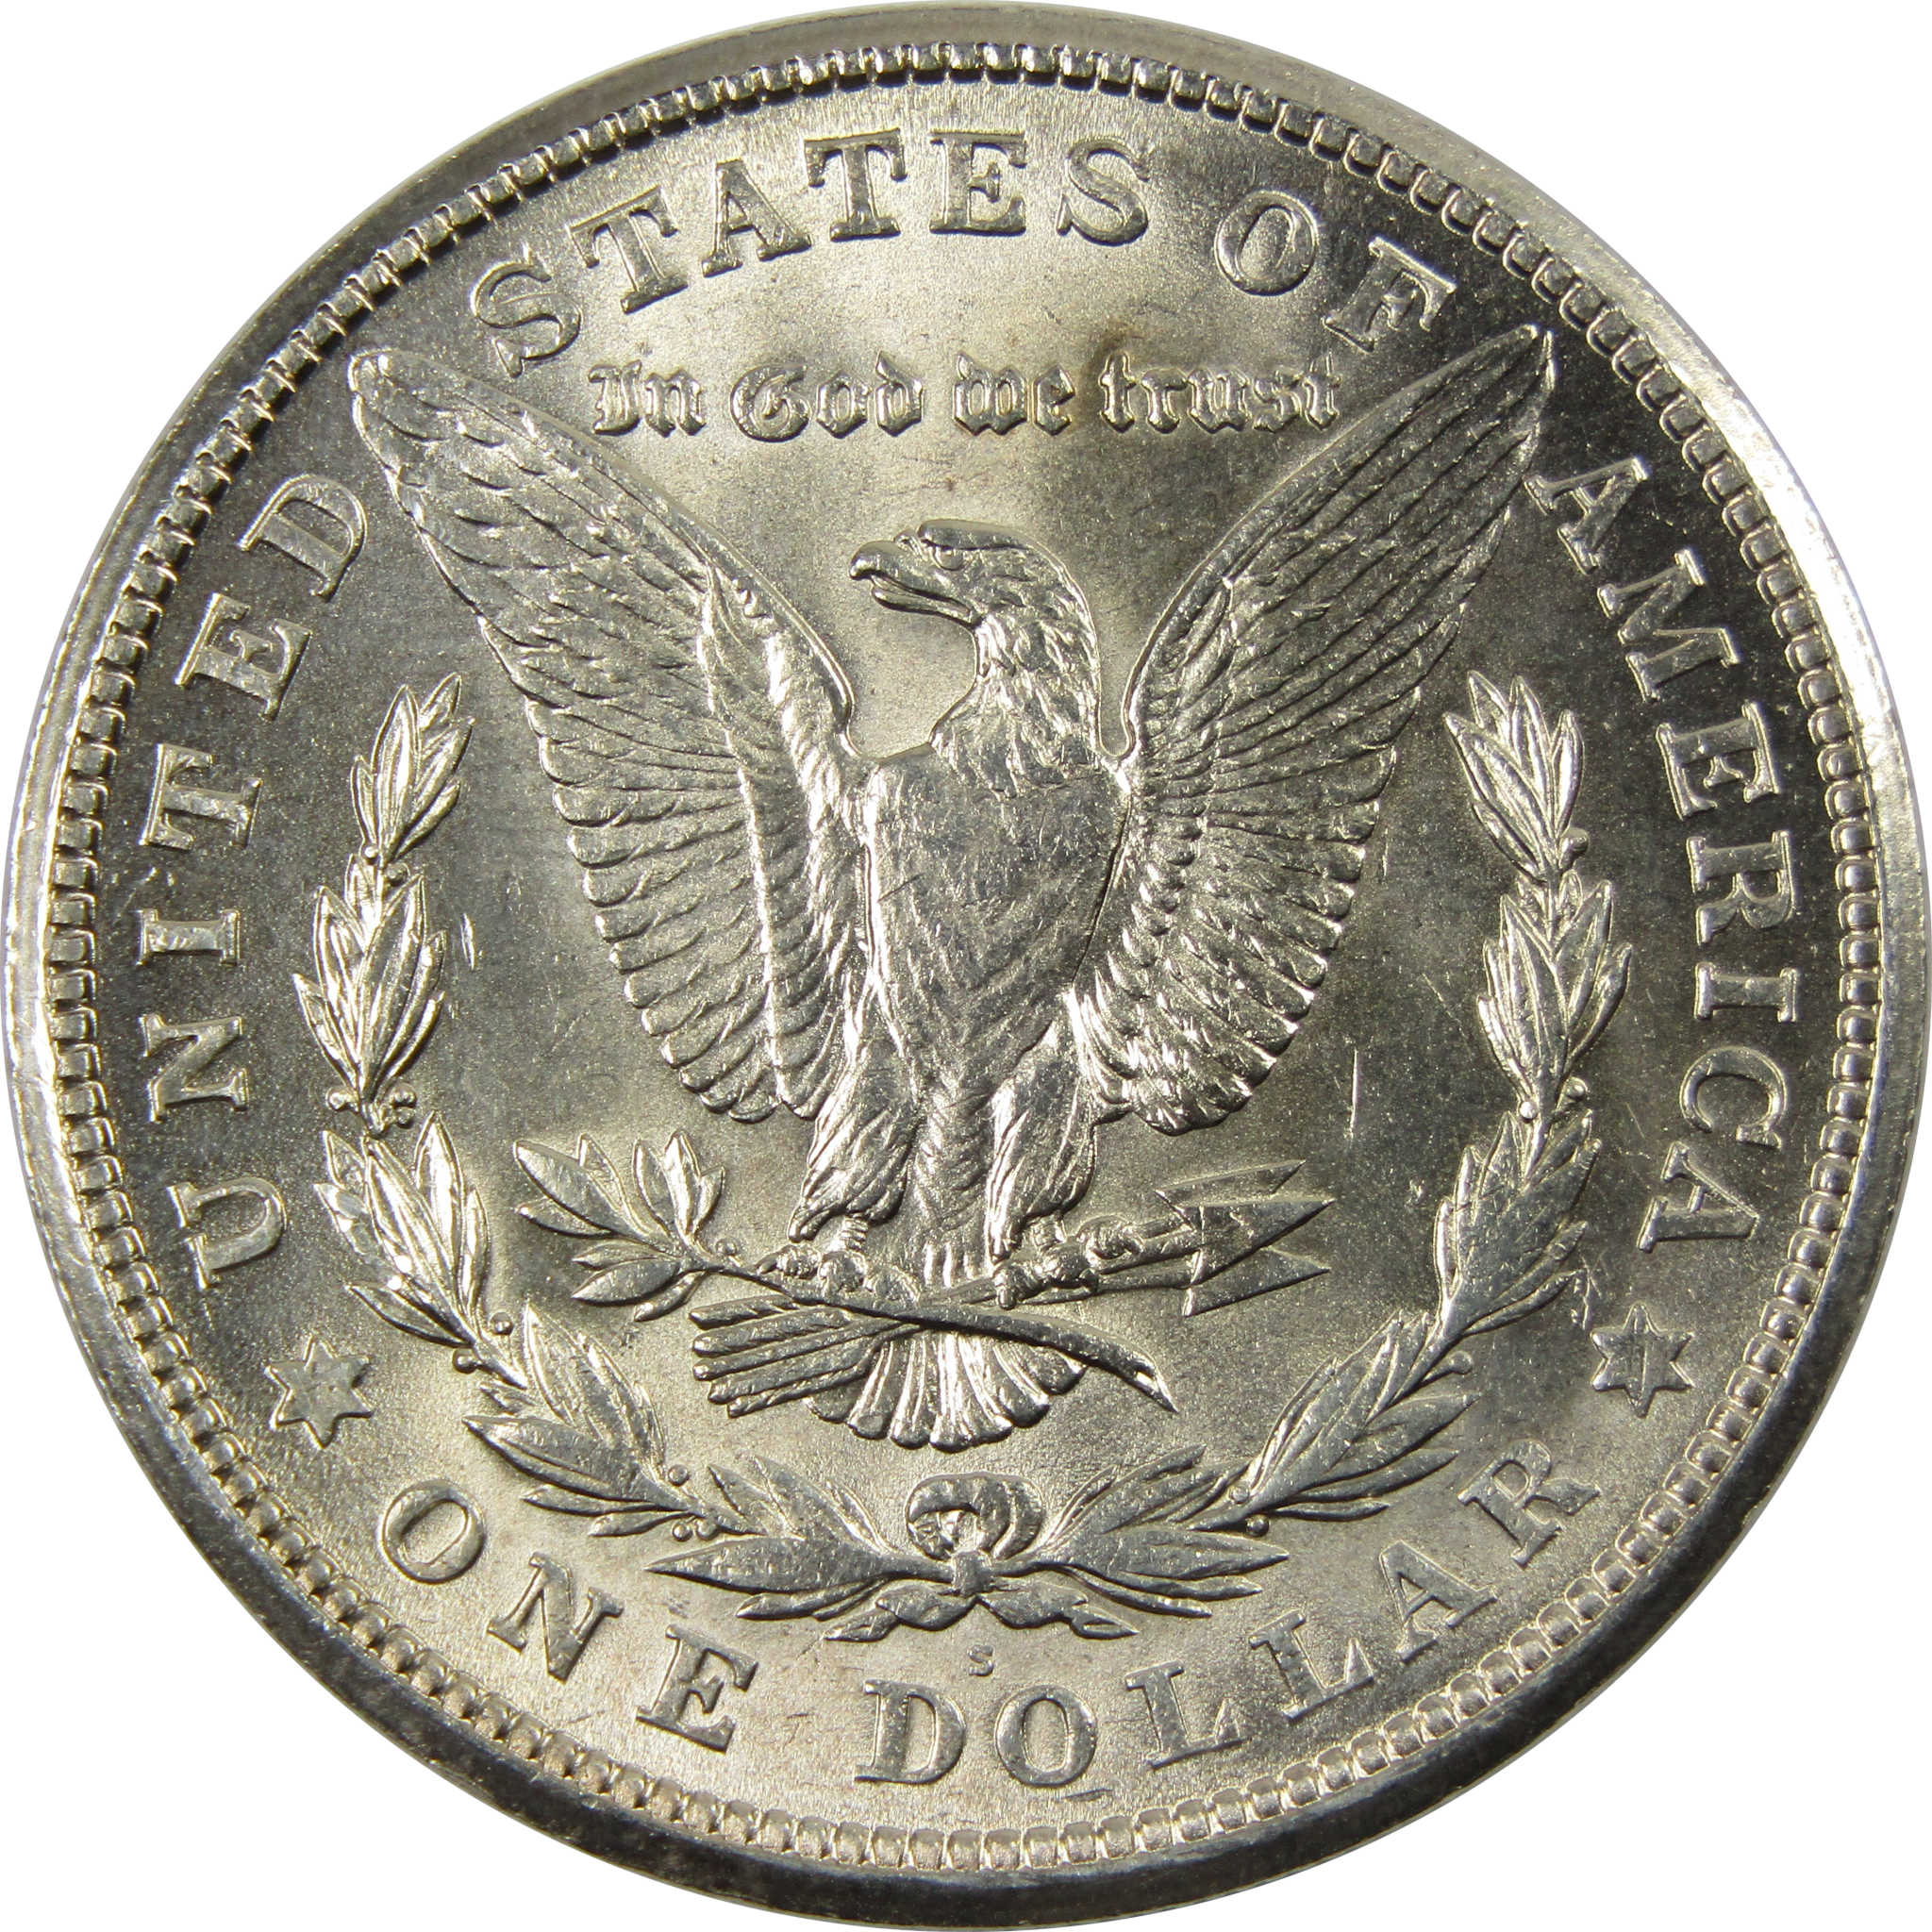 1921 S Morgan Dollar BU Uncirculated 90% Silver $1 Coin SKU:I7416 - Morgan coin - Morgan silver dollar - Morgan silver dollar for sale - Profile Coins &amp; Collectibles